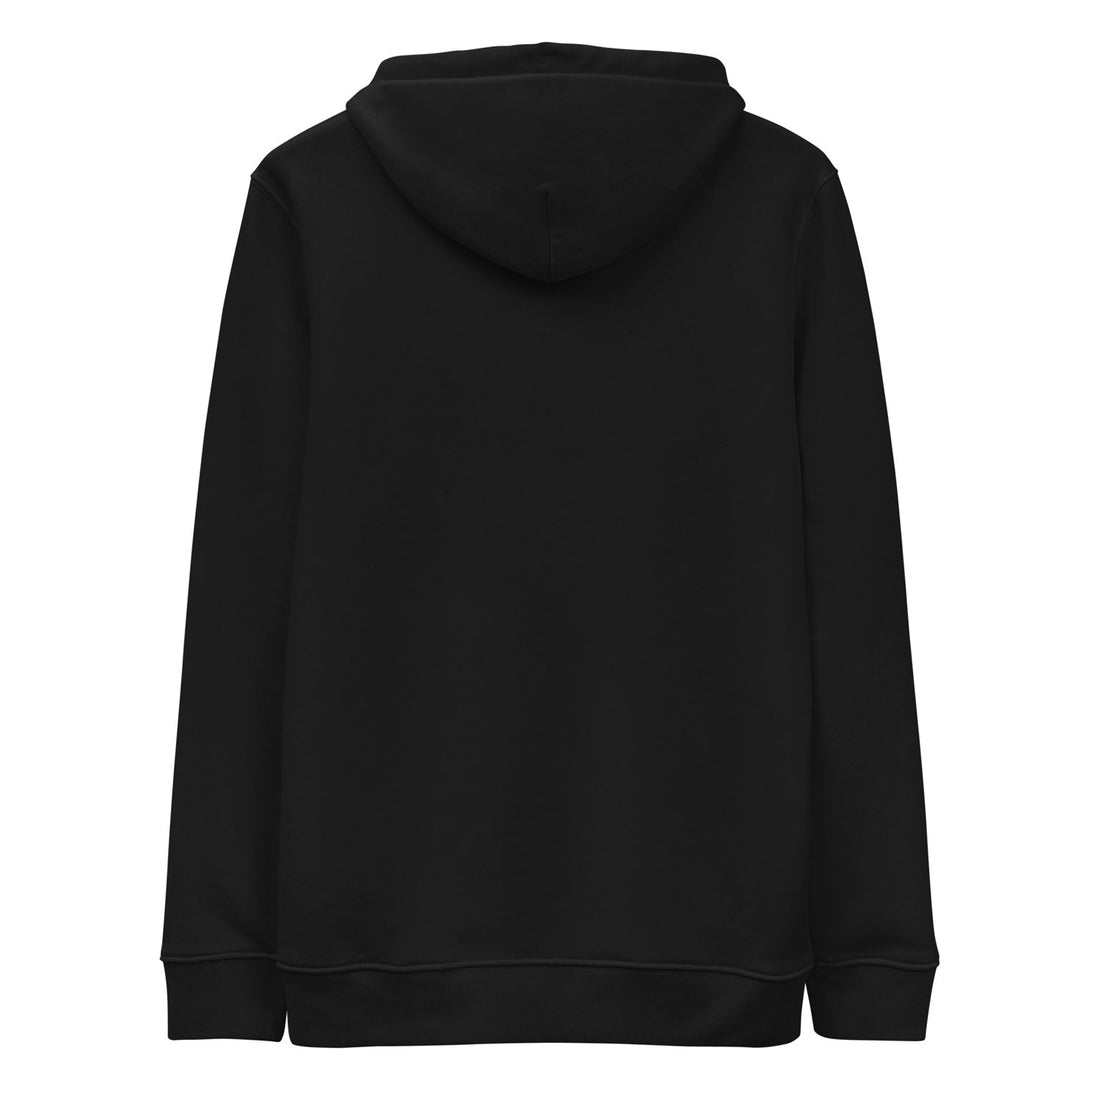 btc graphic hoodie black